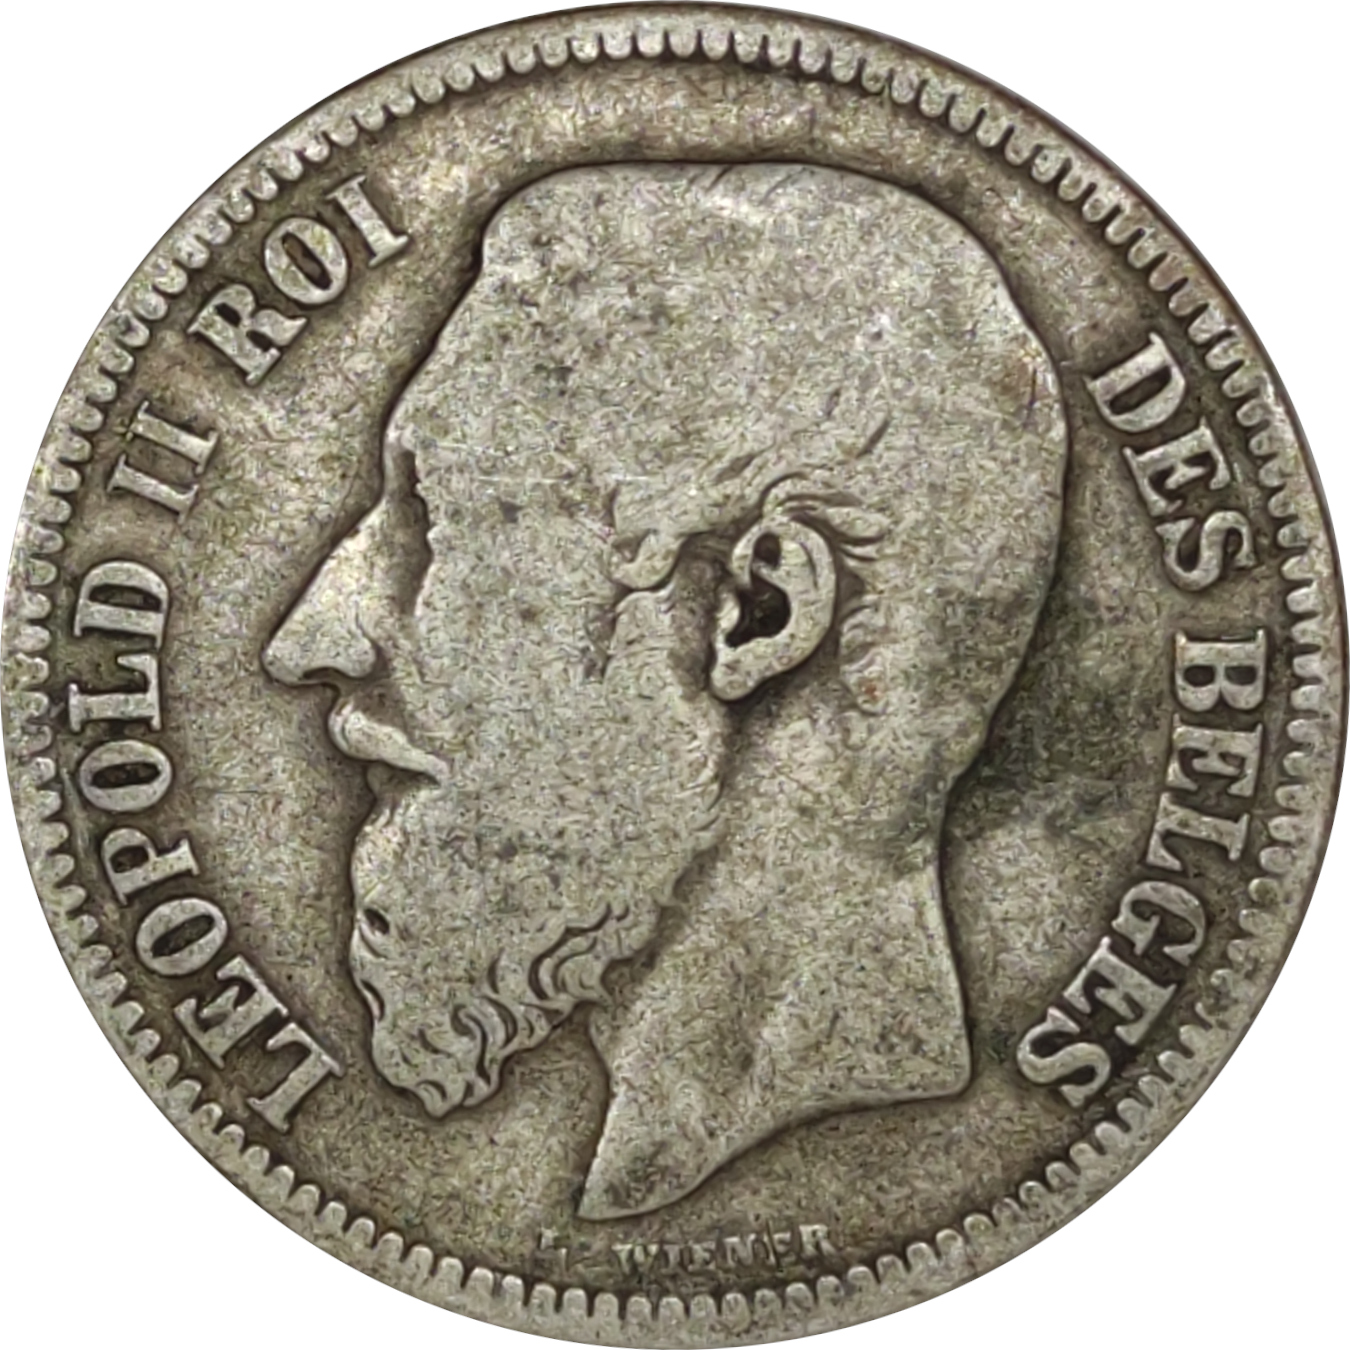 2 francs - Leopold II - Young head